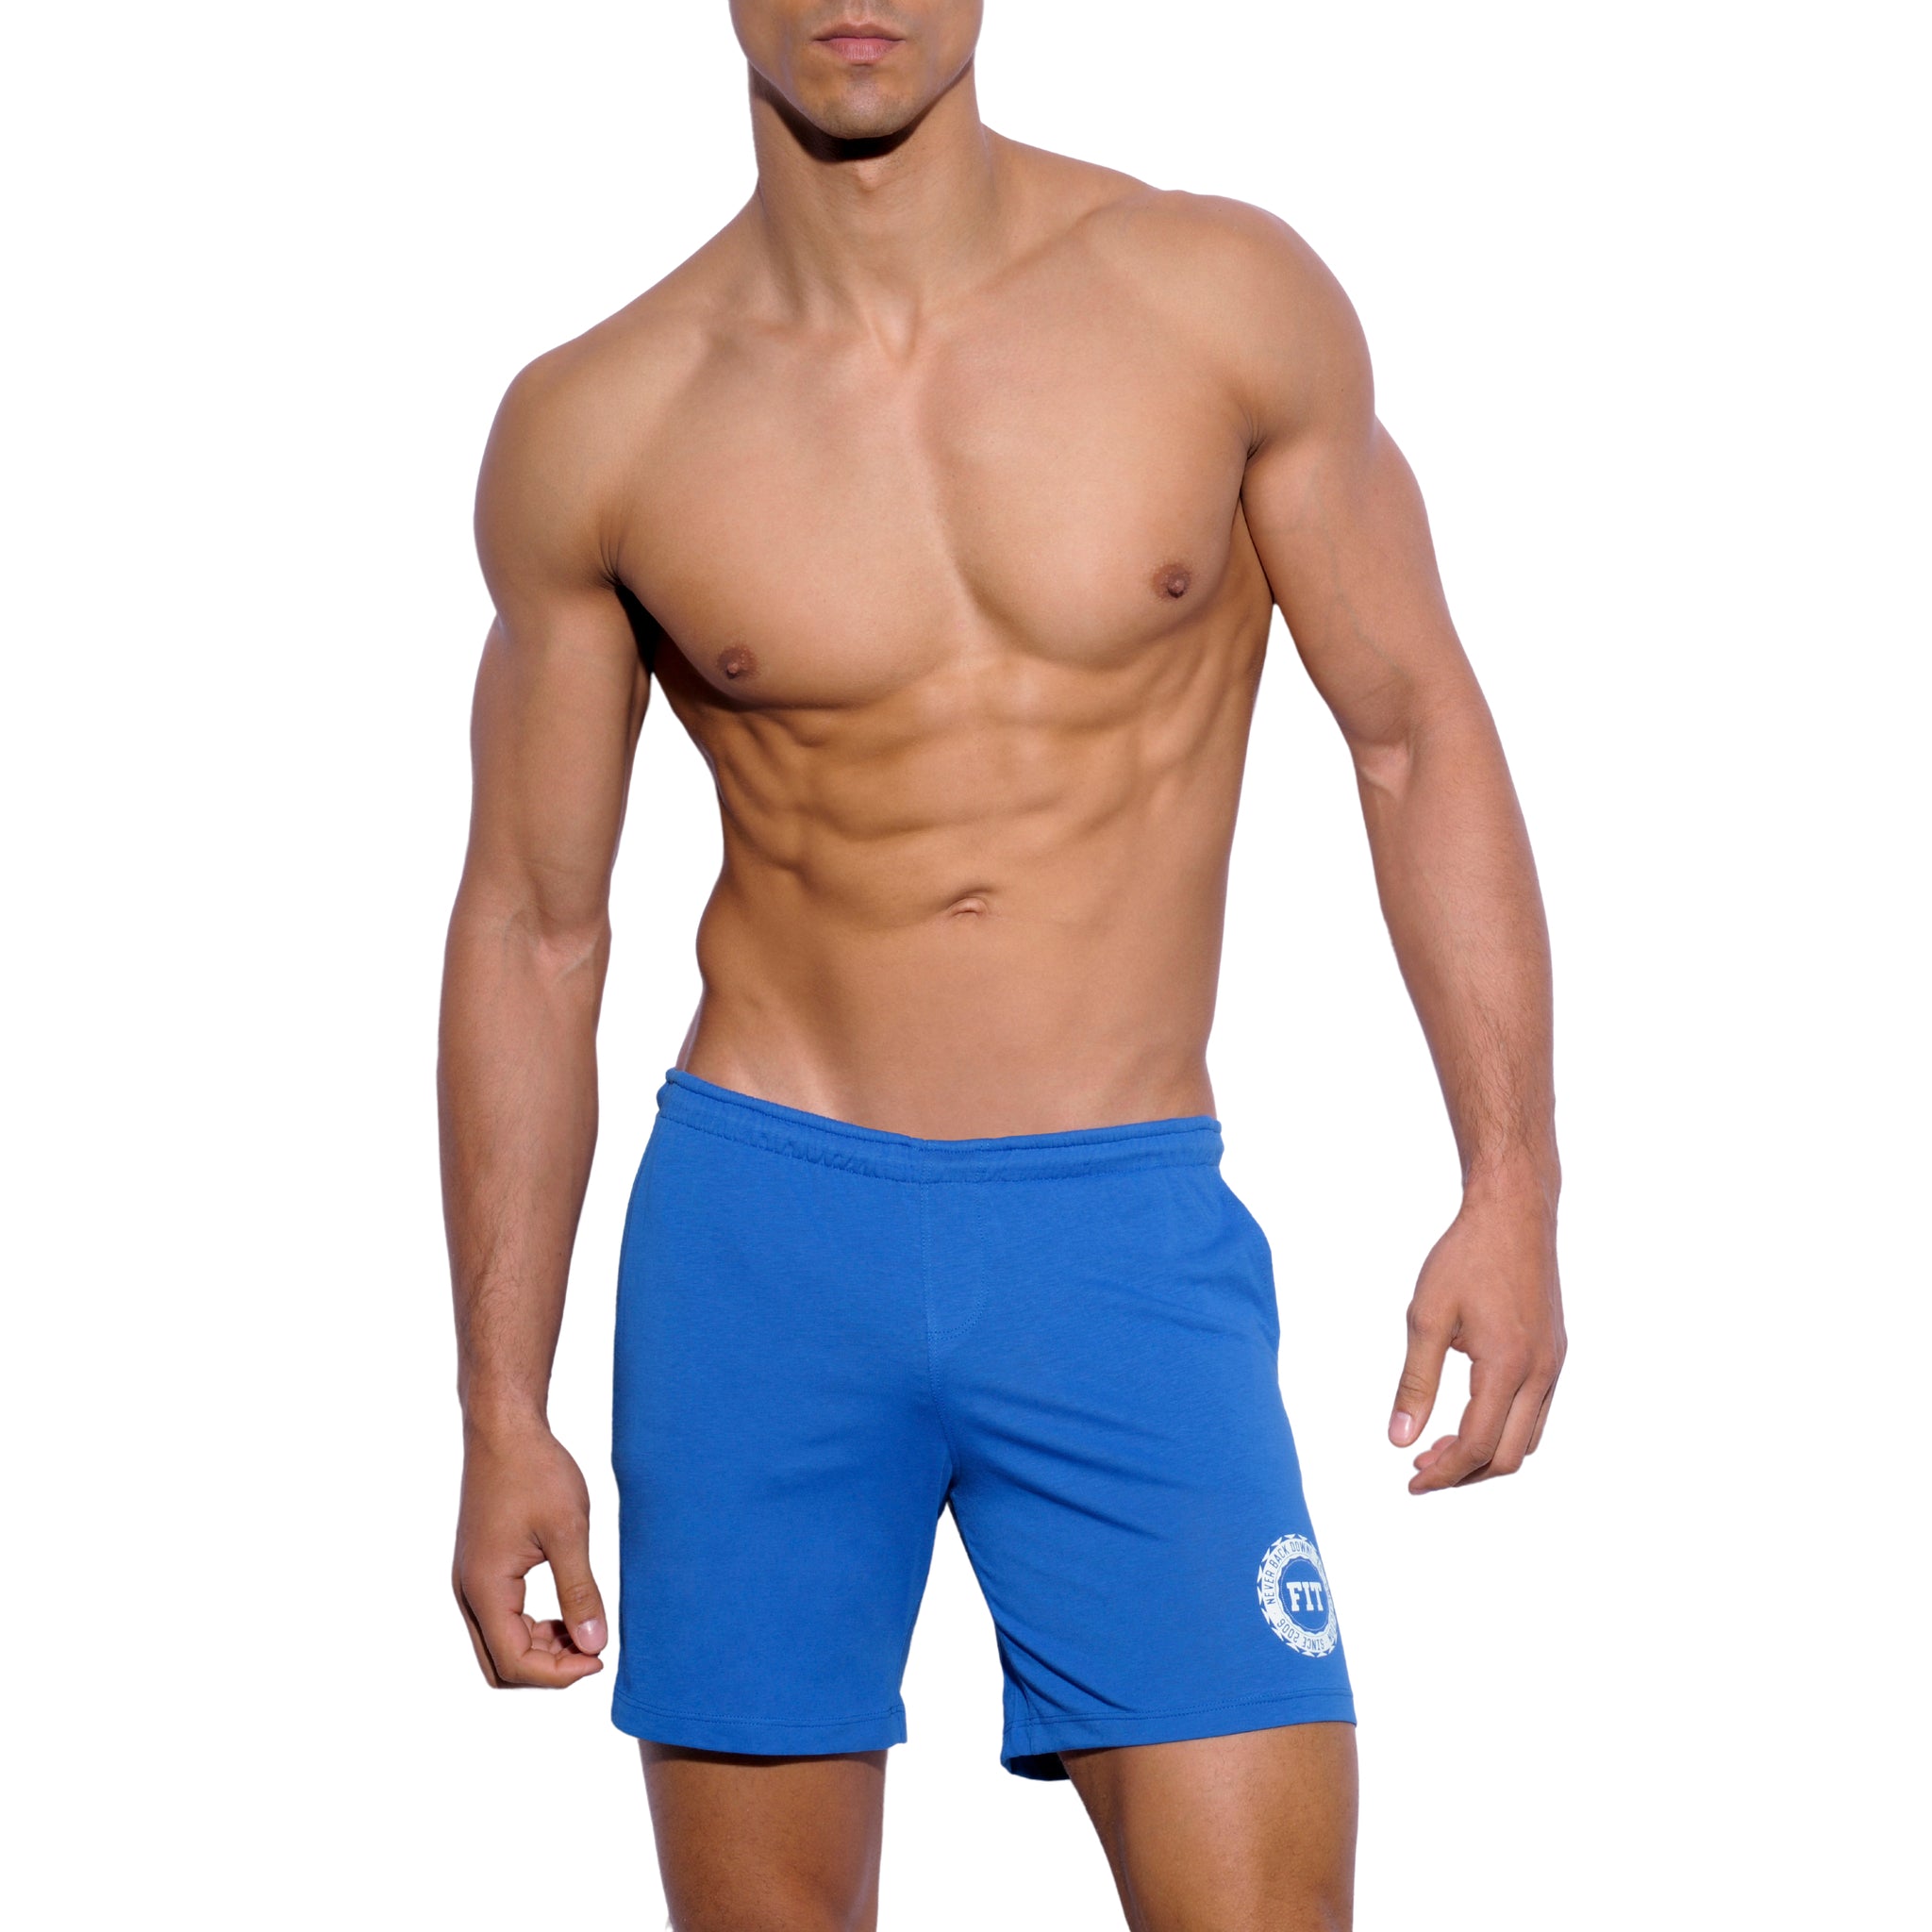 ES Collection Fitness Medium Pants Royal Blue SP130